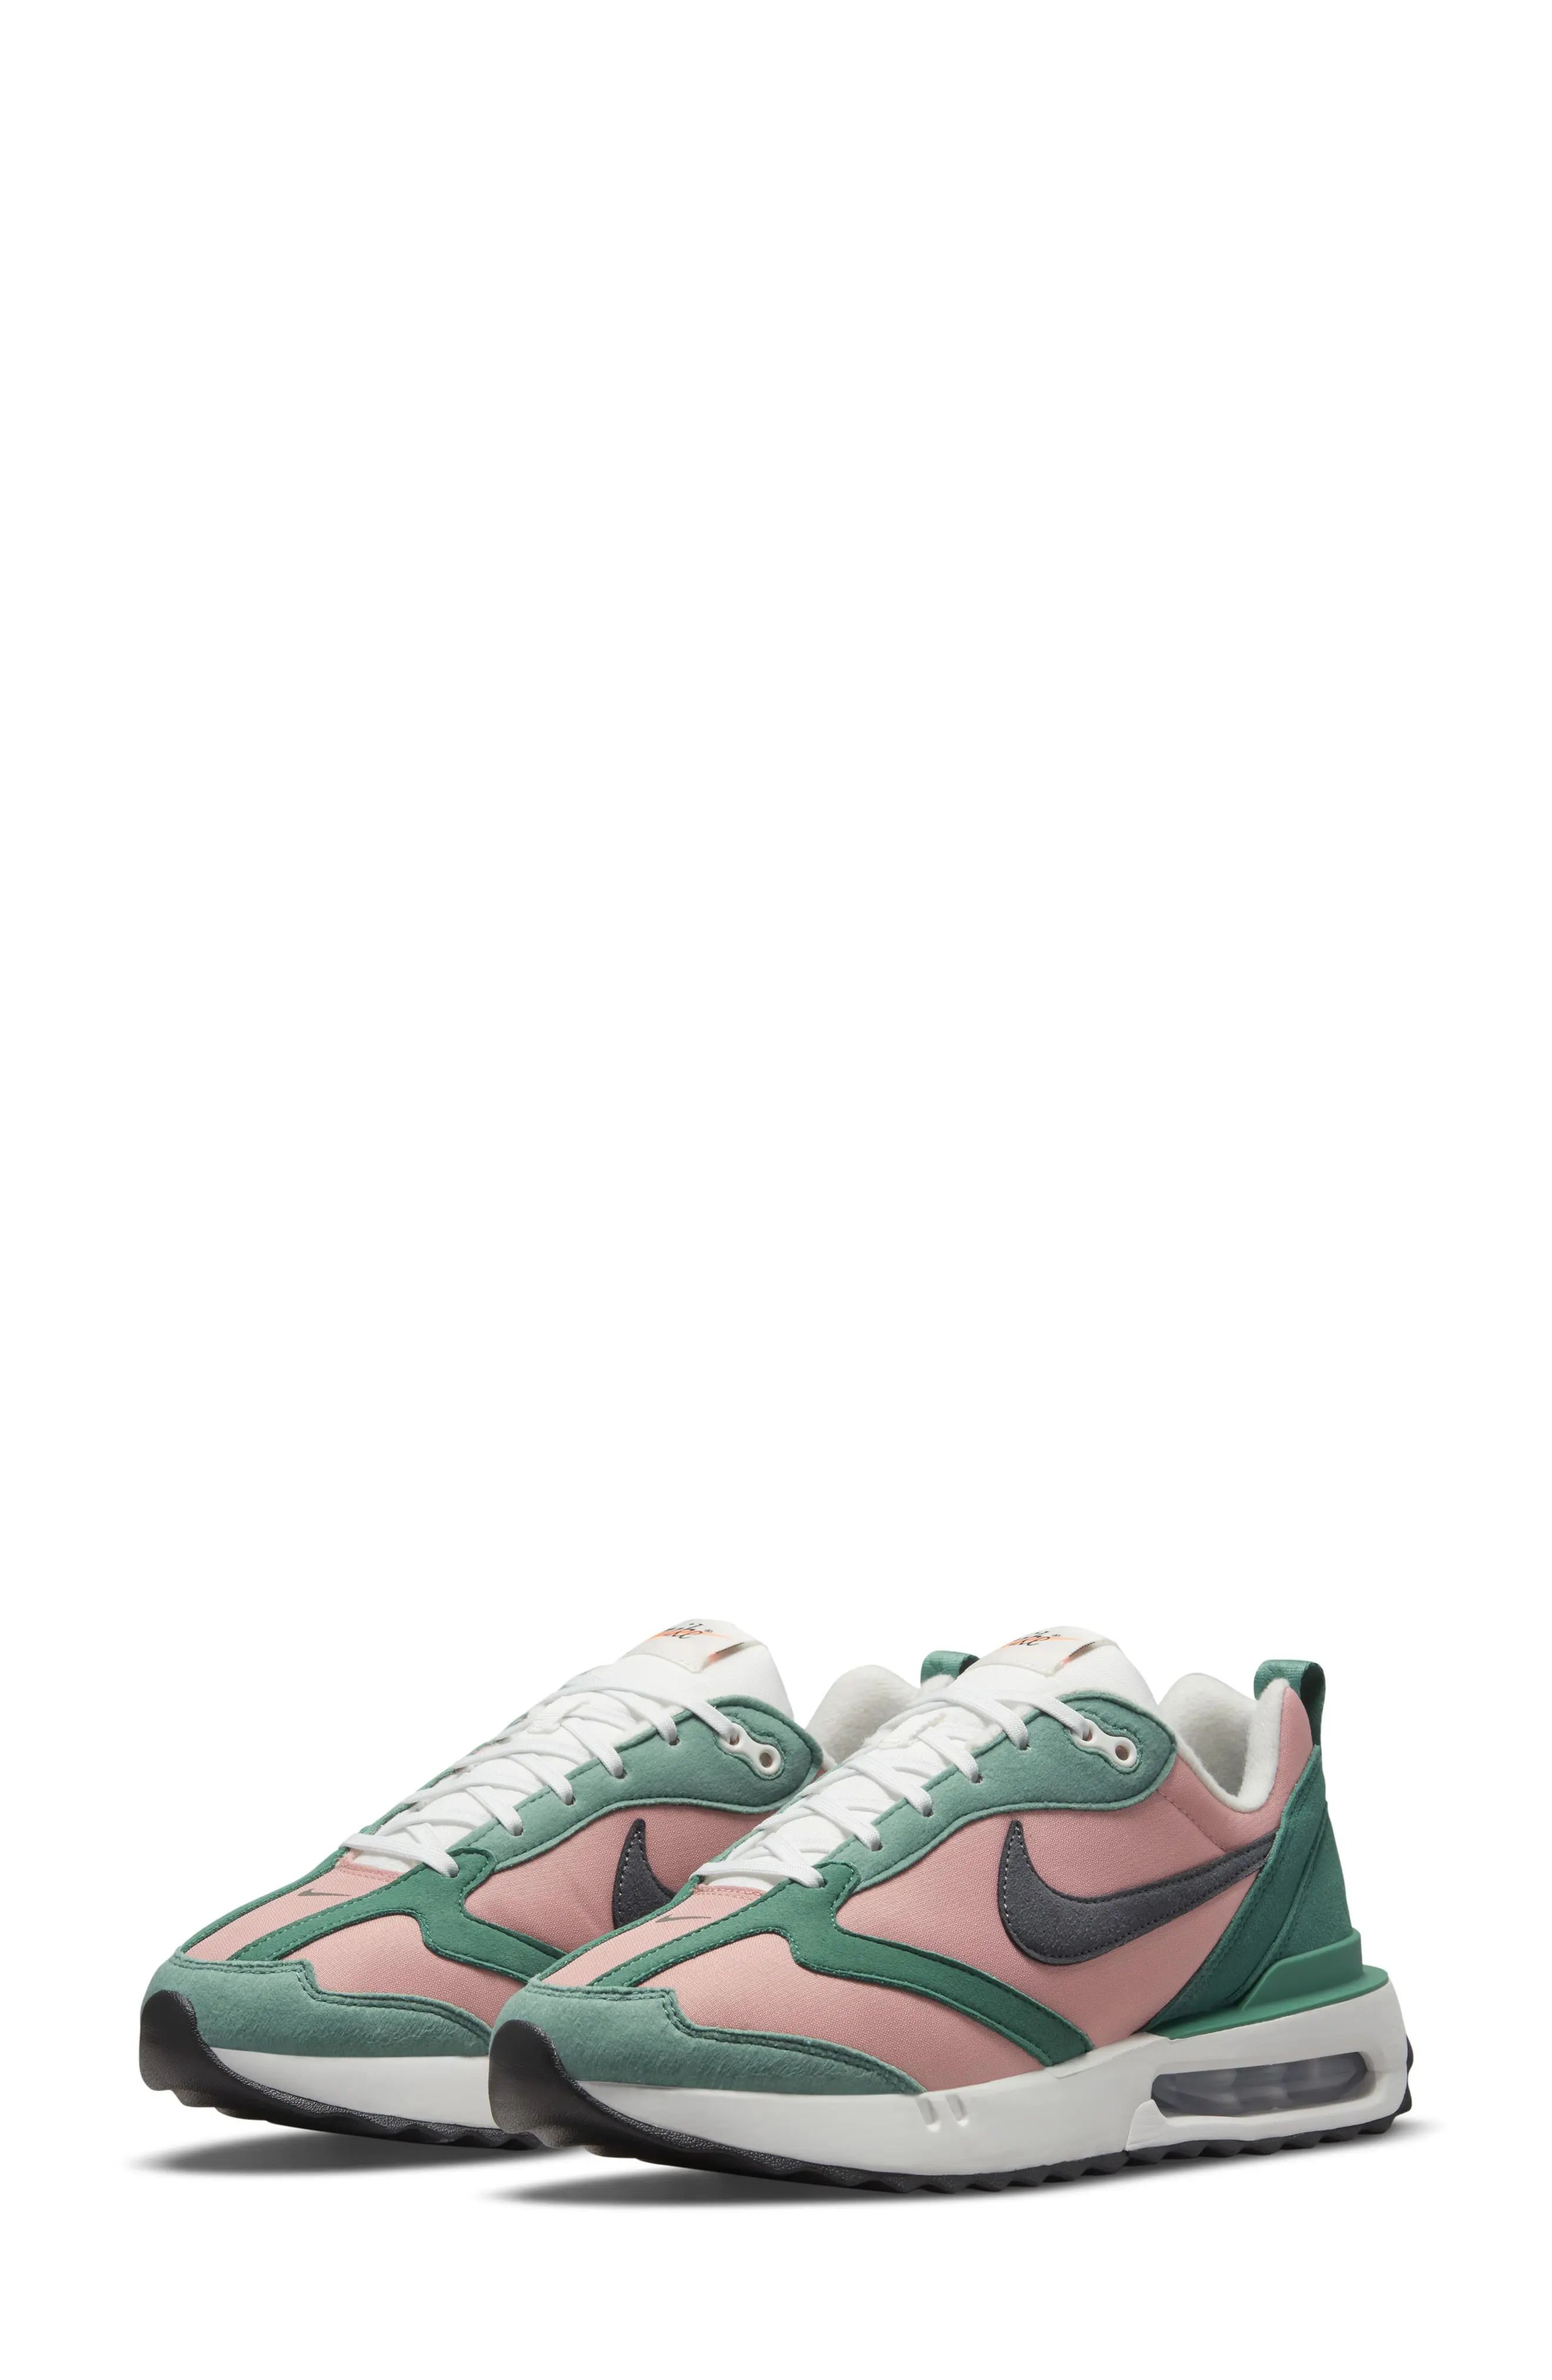 Nike Air Max Dawn Sneaker in Rust Pink/Grey/Jade at Nordstrom, Size 9.5 | Nordstrom